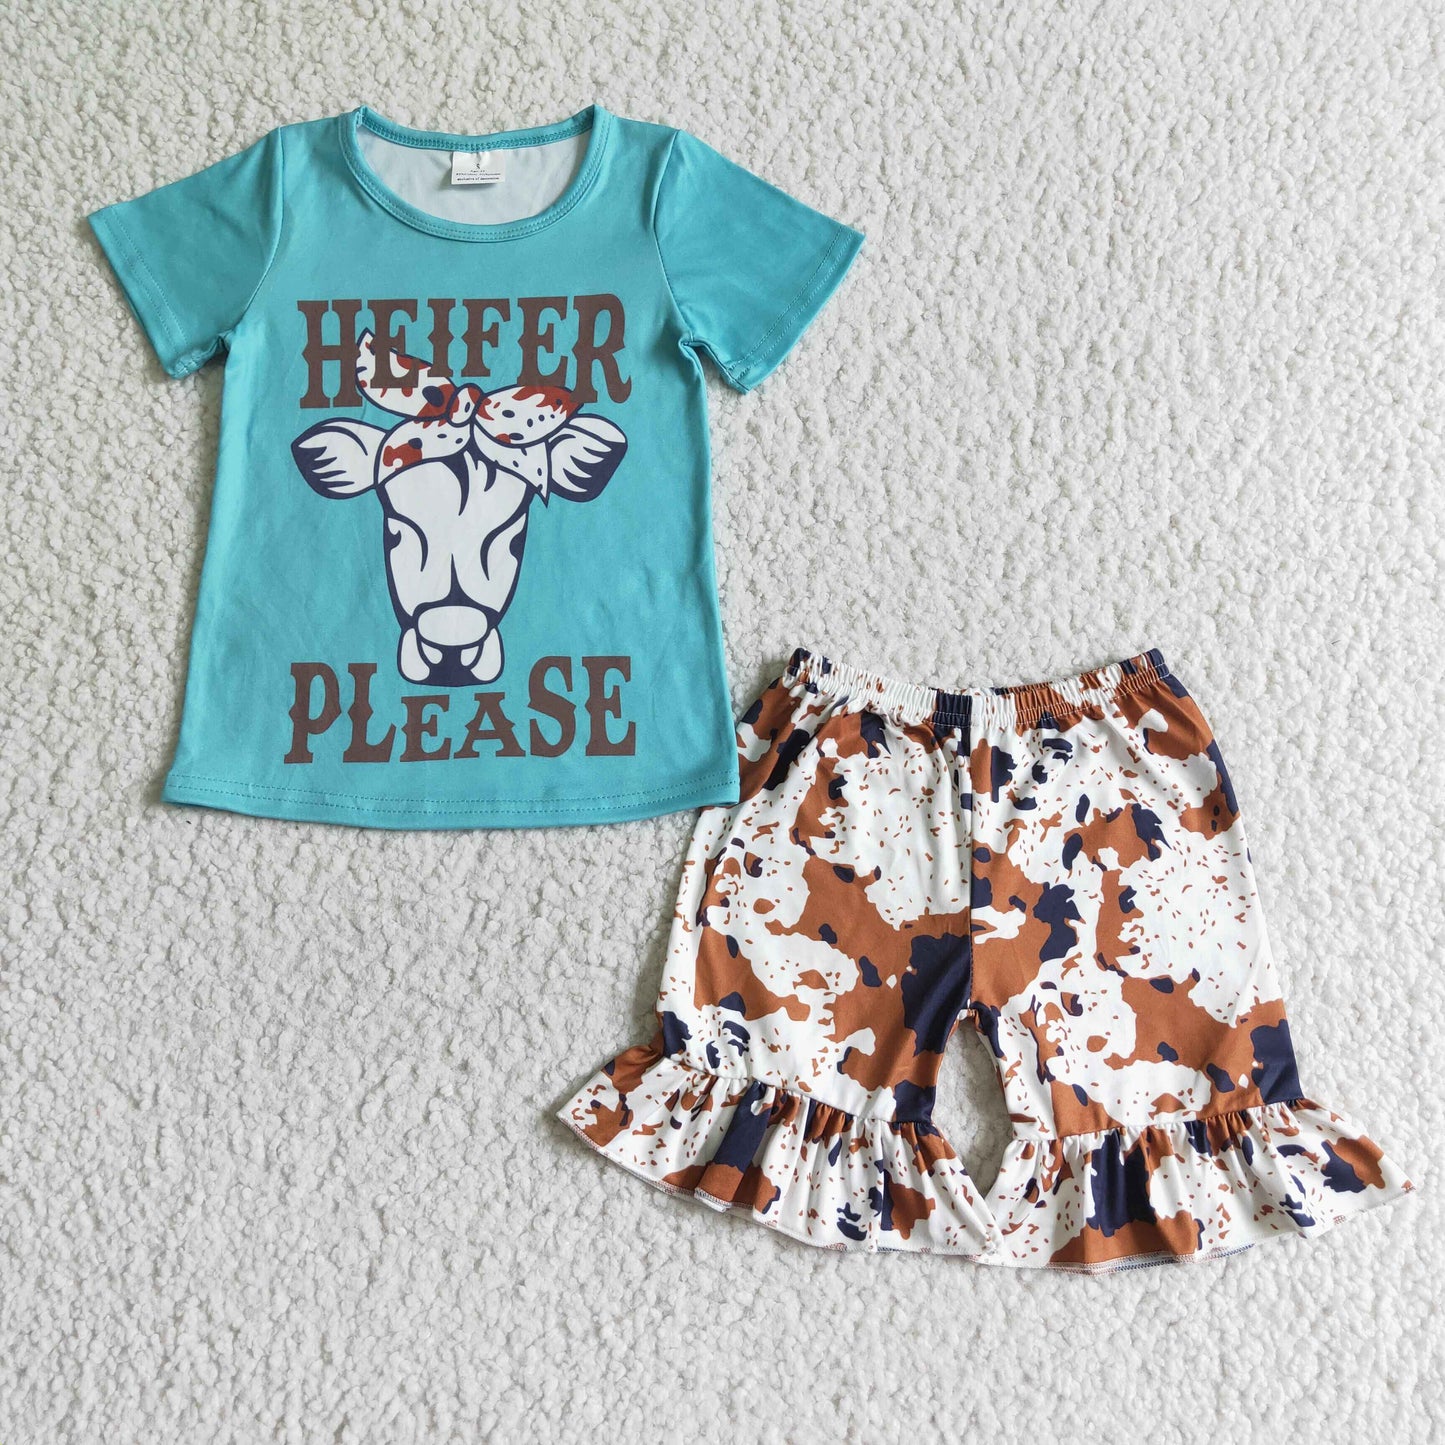 Heifer please cow print shorts girls boutique clothing set